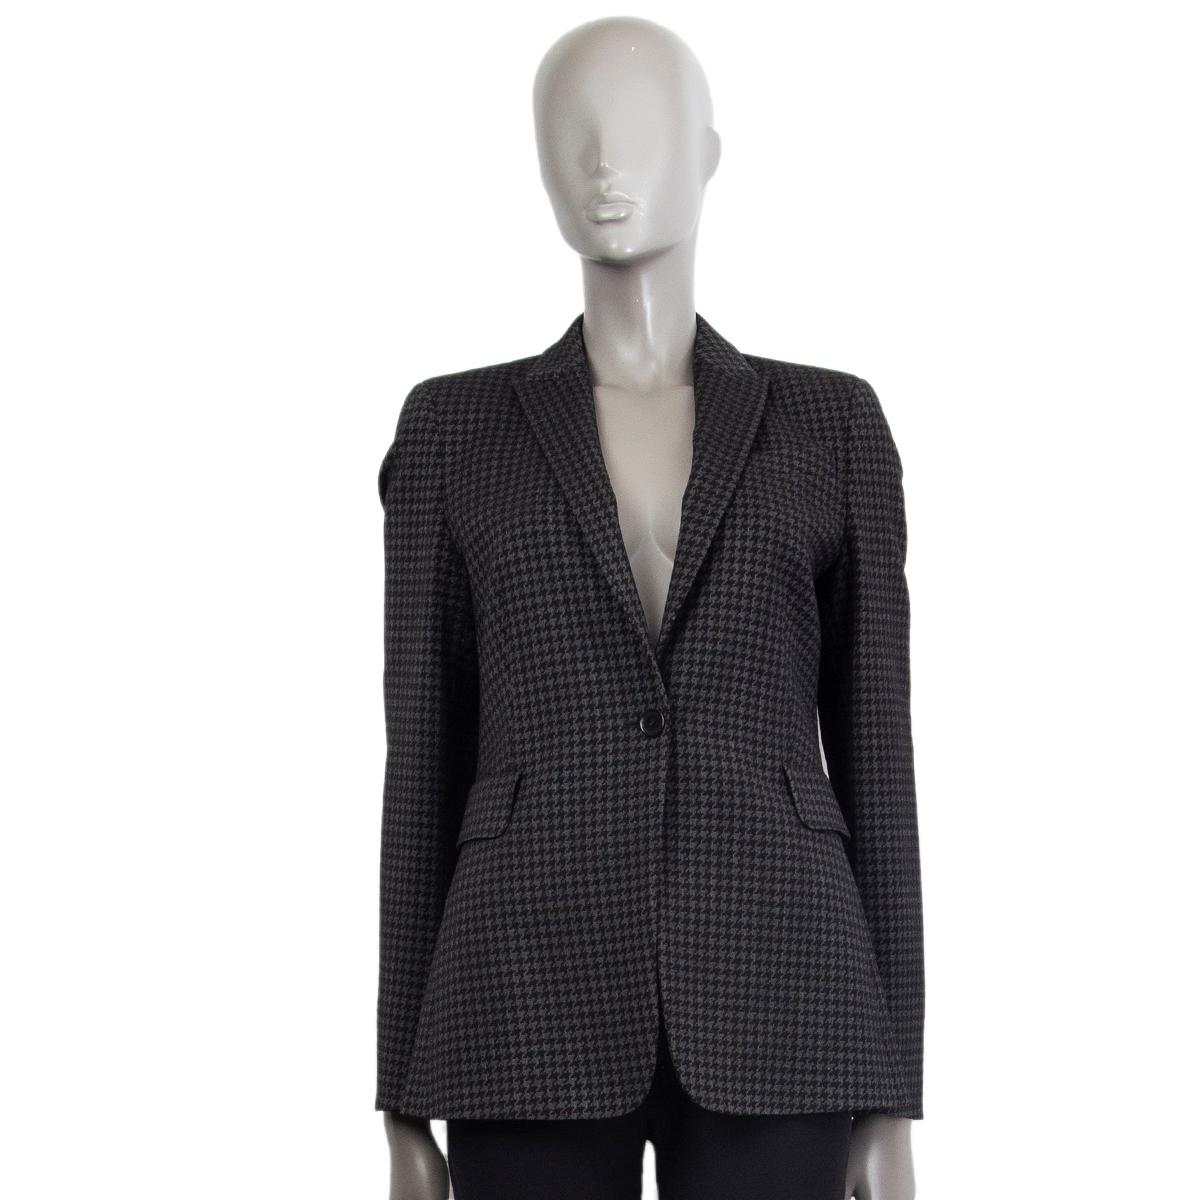 Black AKRIS PUNTO grey & black wool blend HOUNDSTOOTH Blazer Jacket 36 S